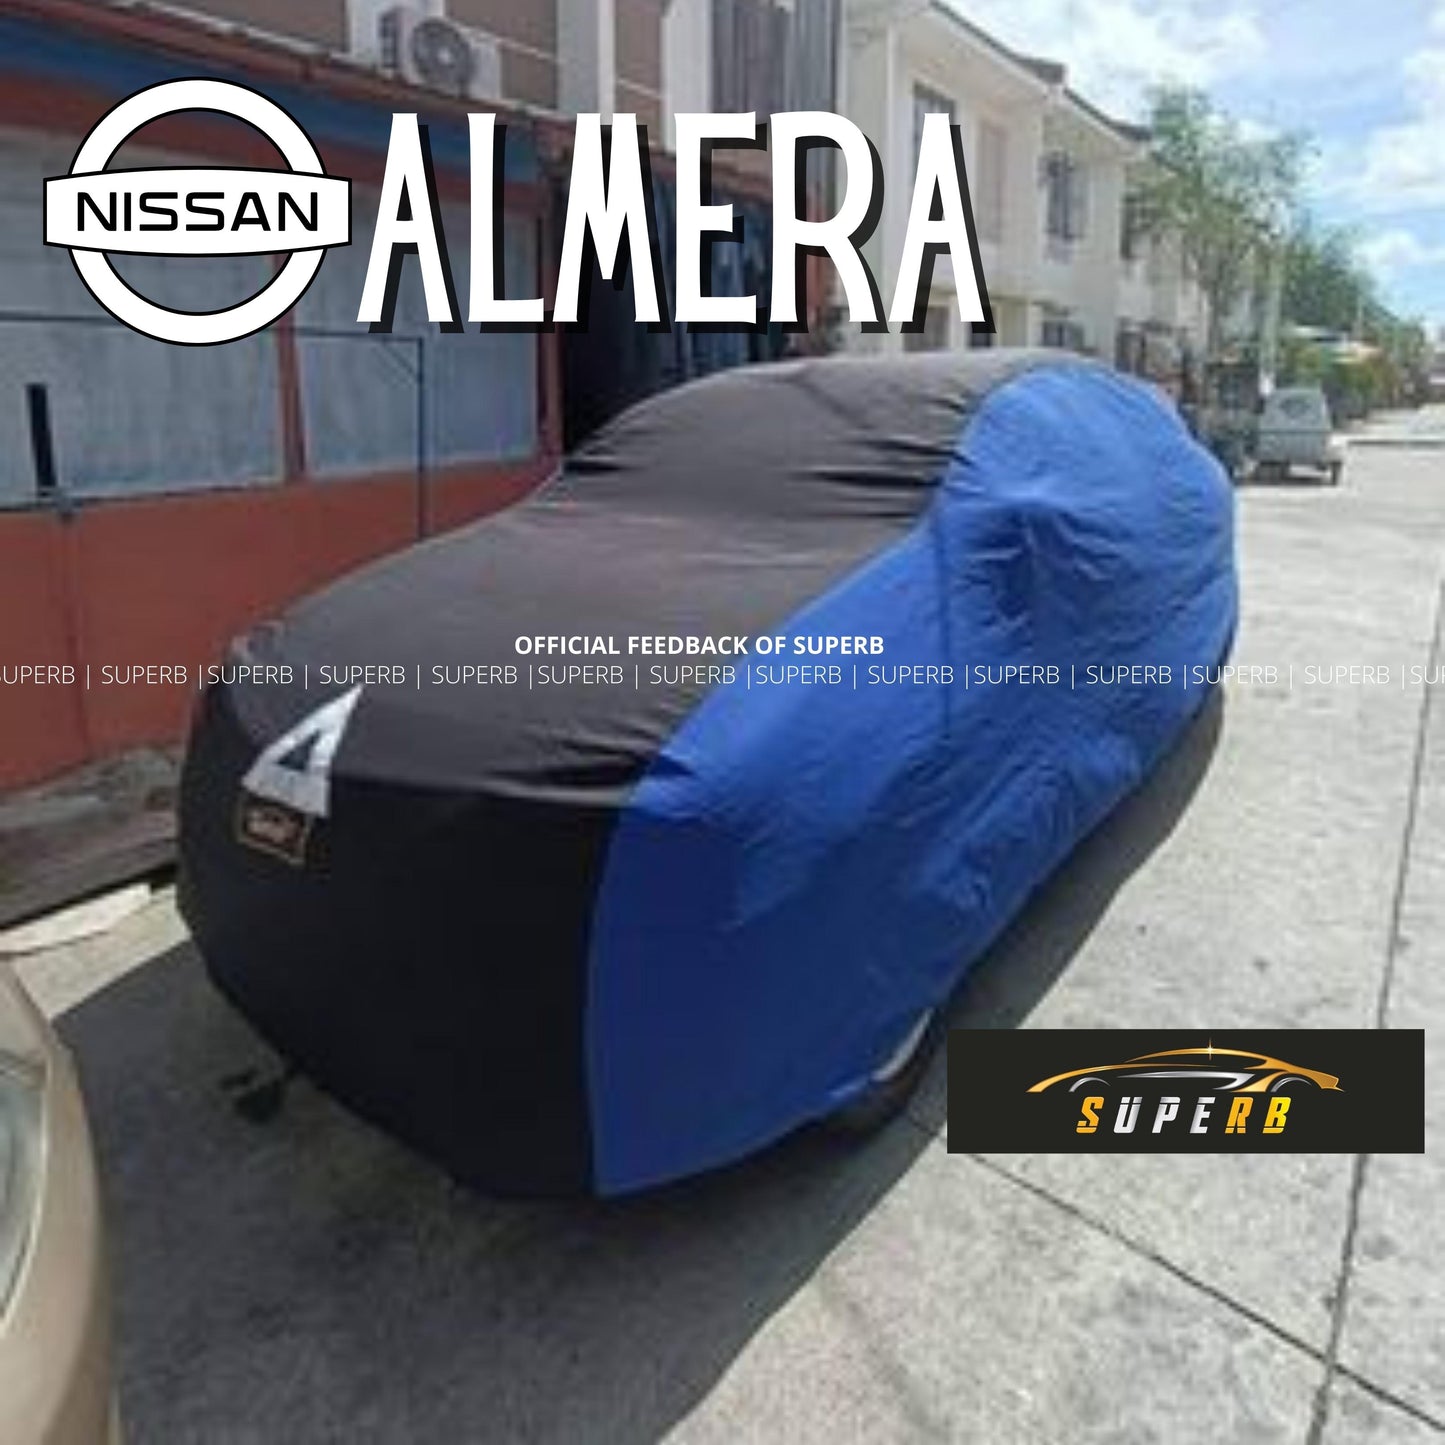 SUPERB Car Cover for SEDAN (Vios/G4/Accent/City/Civic/Dzire/Soluto/Ciaz/Almera/Accord/Lancer/Mazda3)